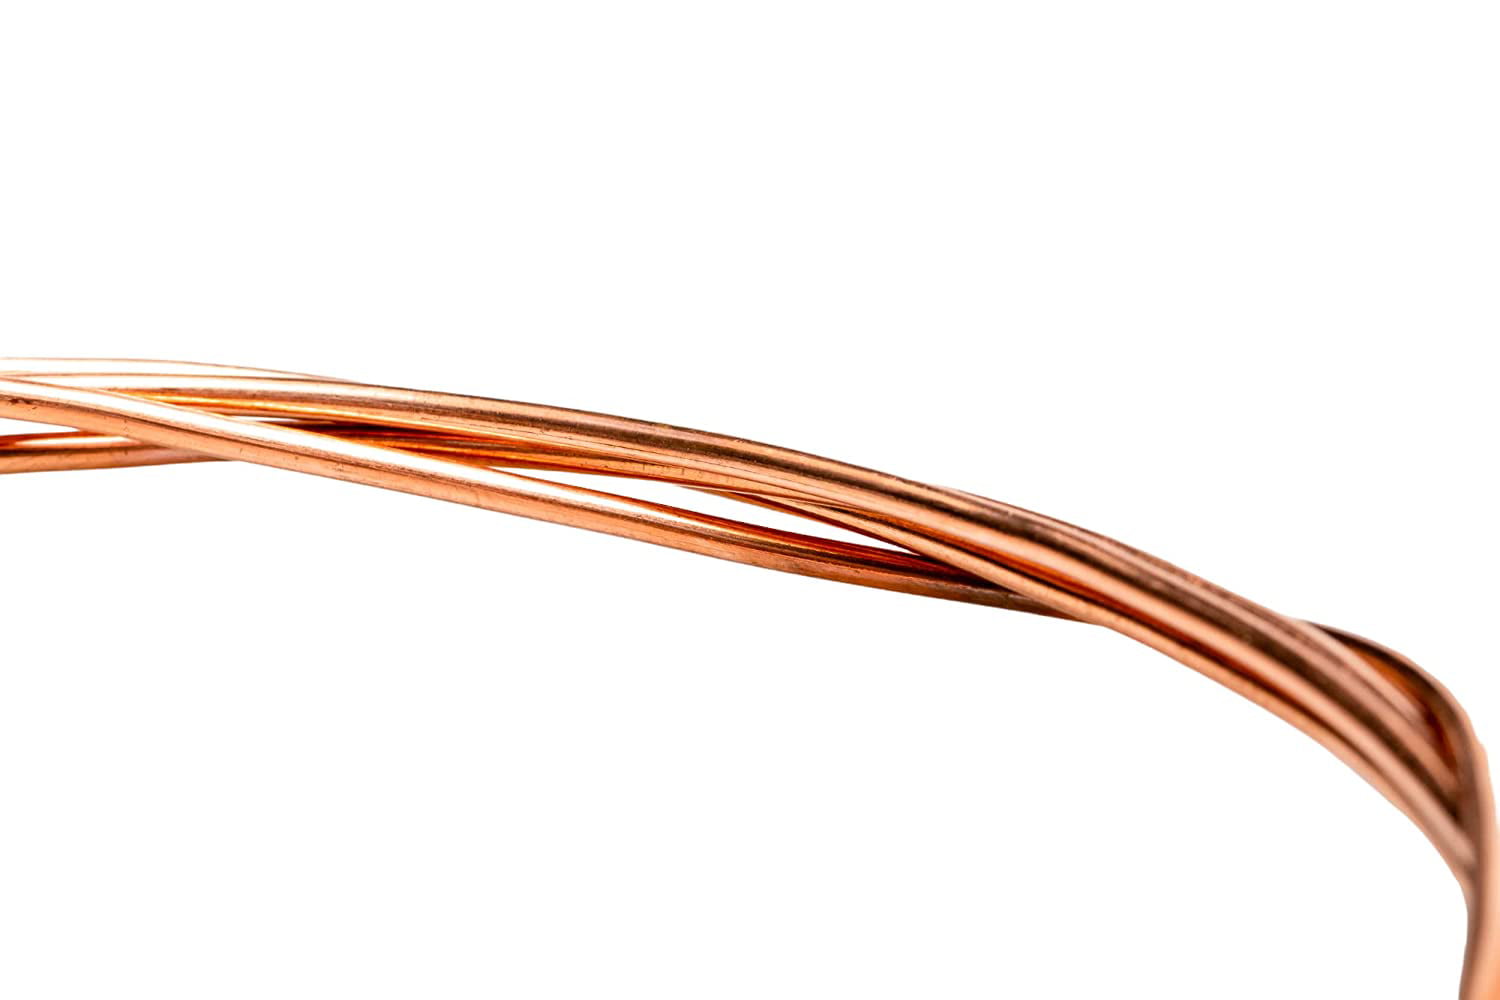 12 Gauge, 99.9% Pure Copper Wire (Square) Dead Soft CDA #110 Made in USA -  10FT